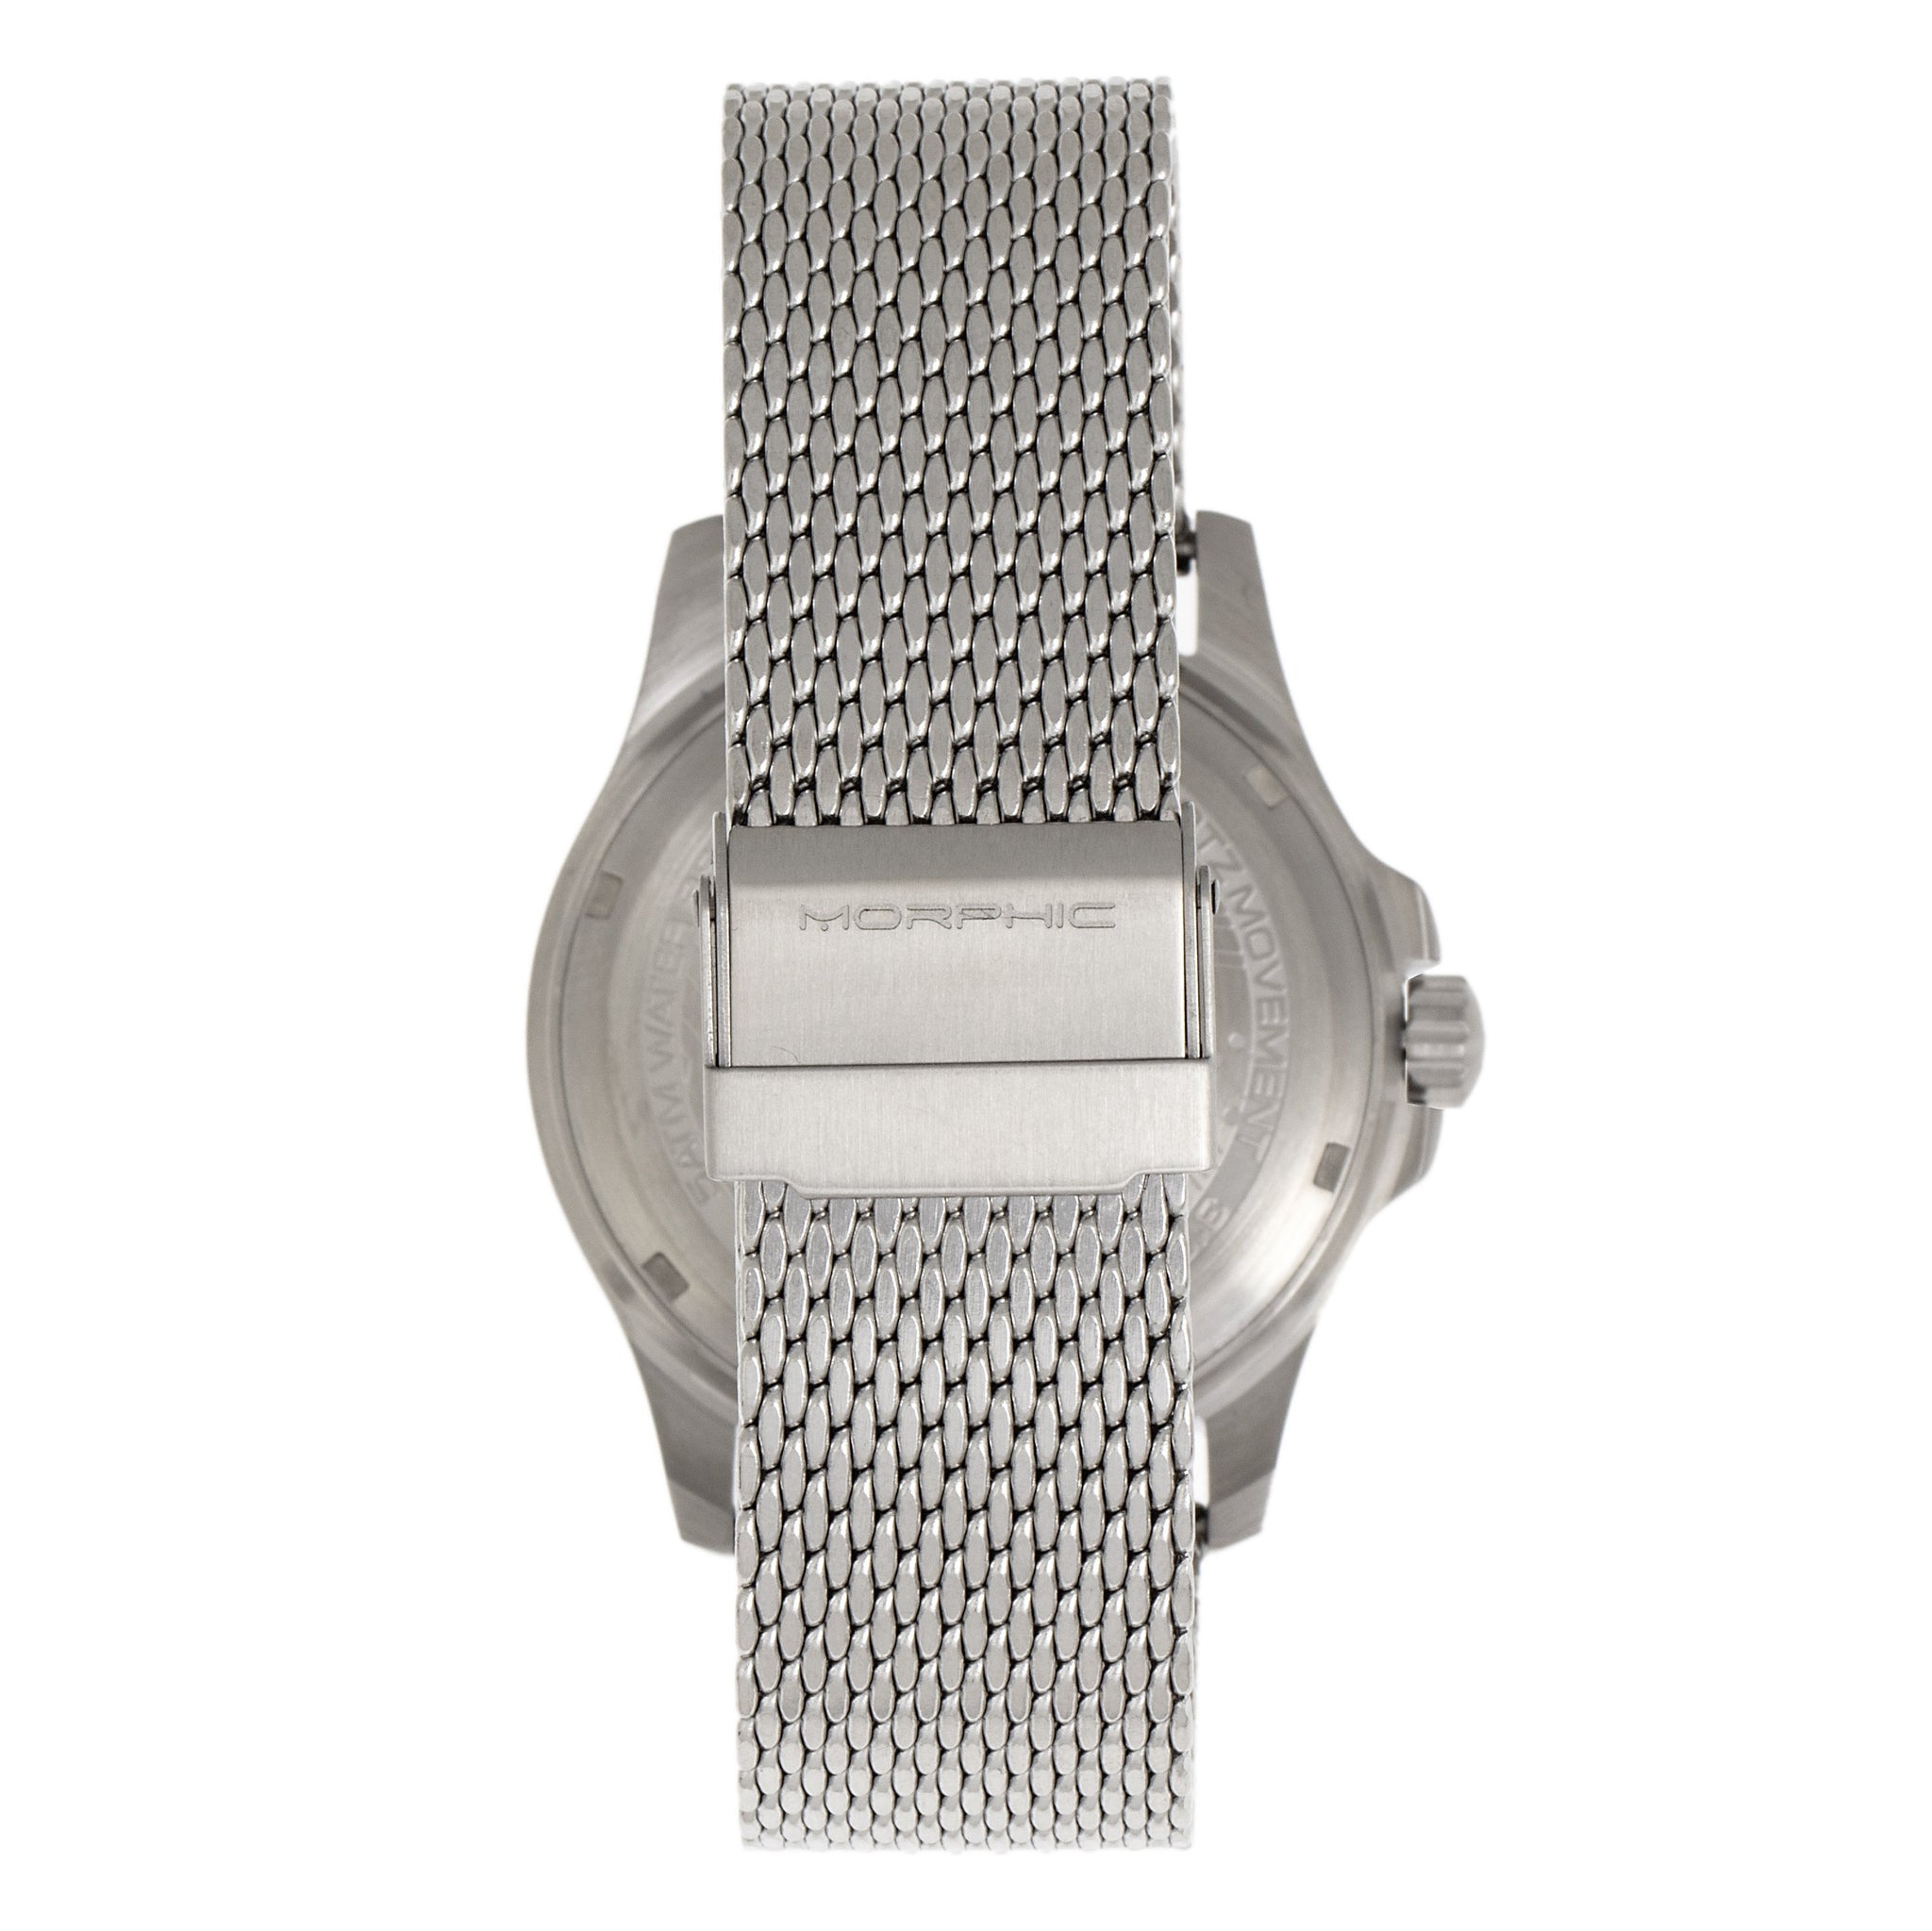 Morphic M80 Series Bracelet Watch w/Date - Silver/Black - MPH8002